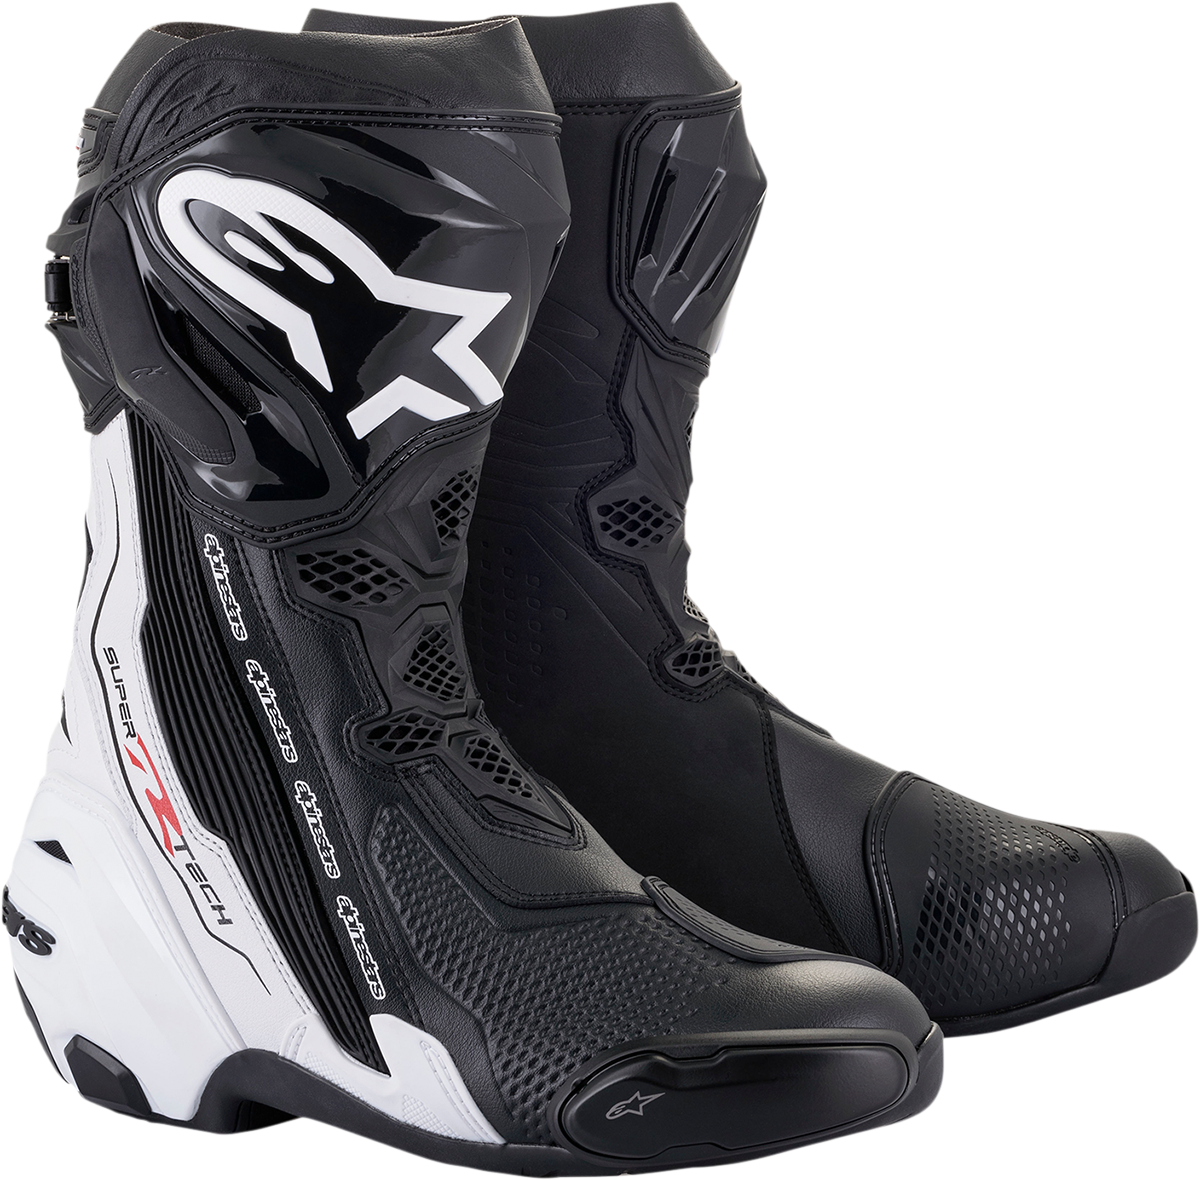 ALPINESTARS Supertech R Boots - Black/White - US 10.5 / EU 45 2220021-12-45